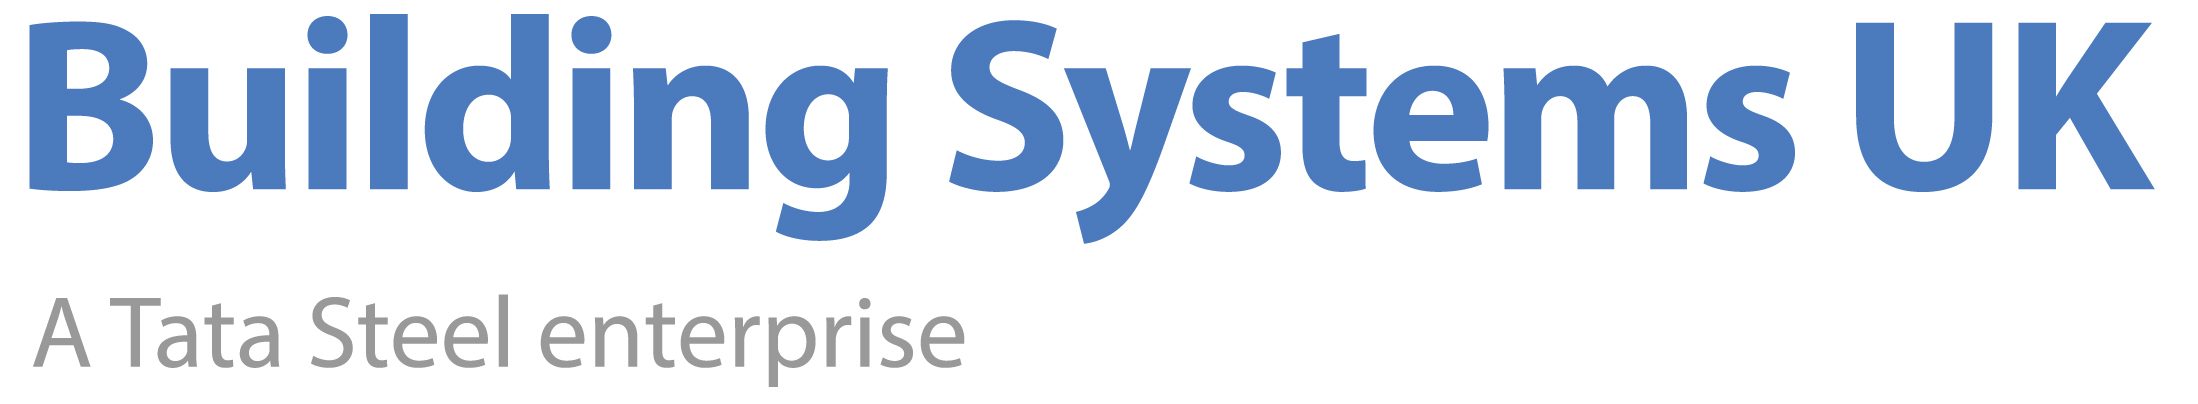 Building Systems UK Tata Steel Enterprise logo